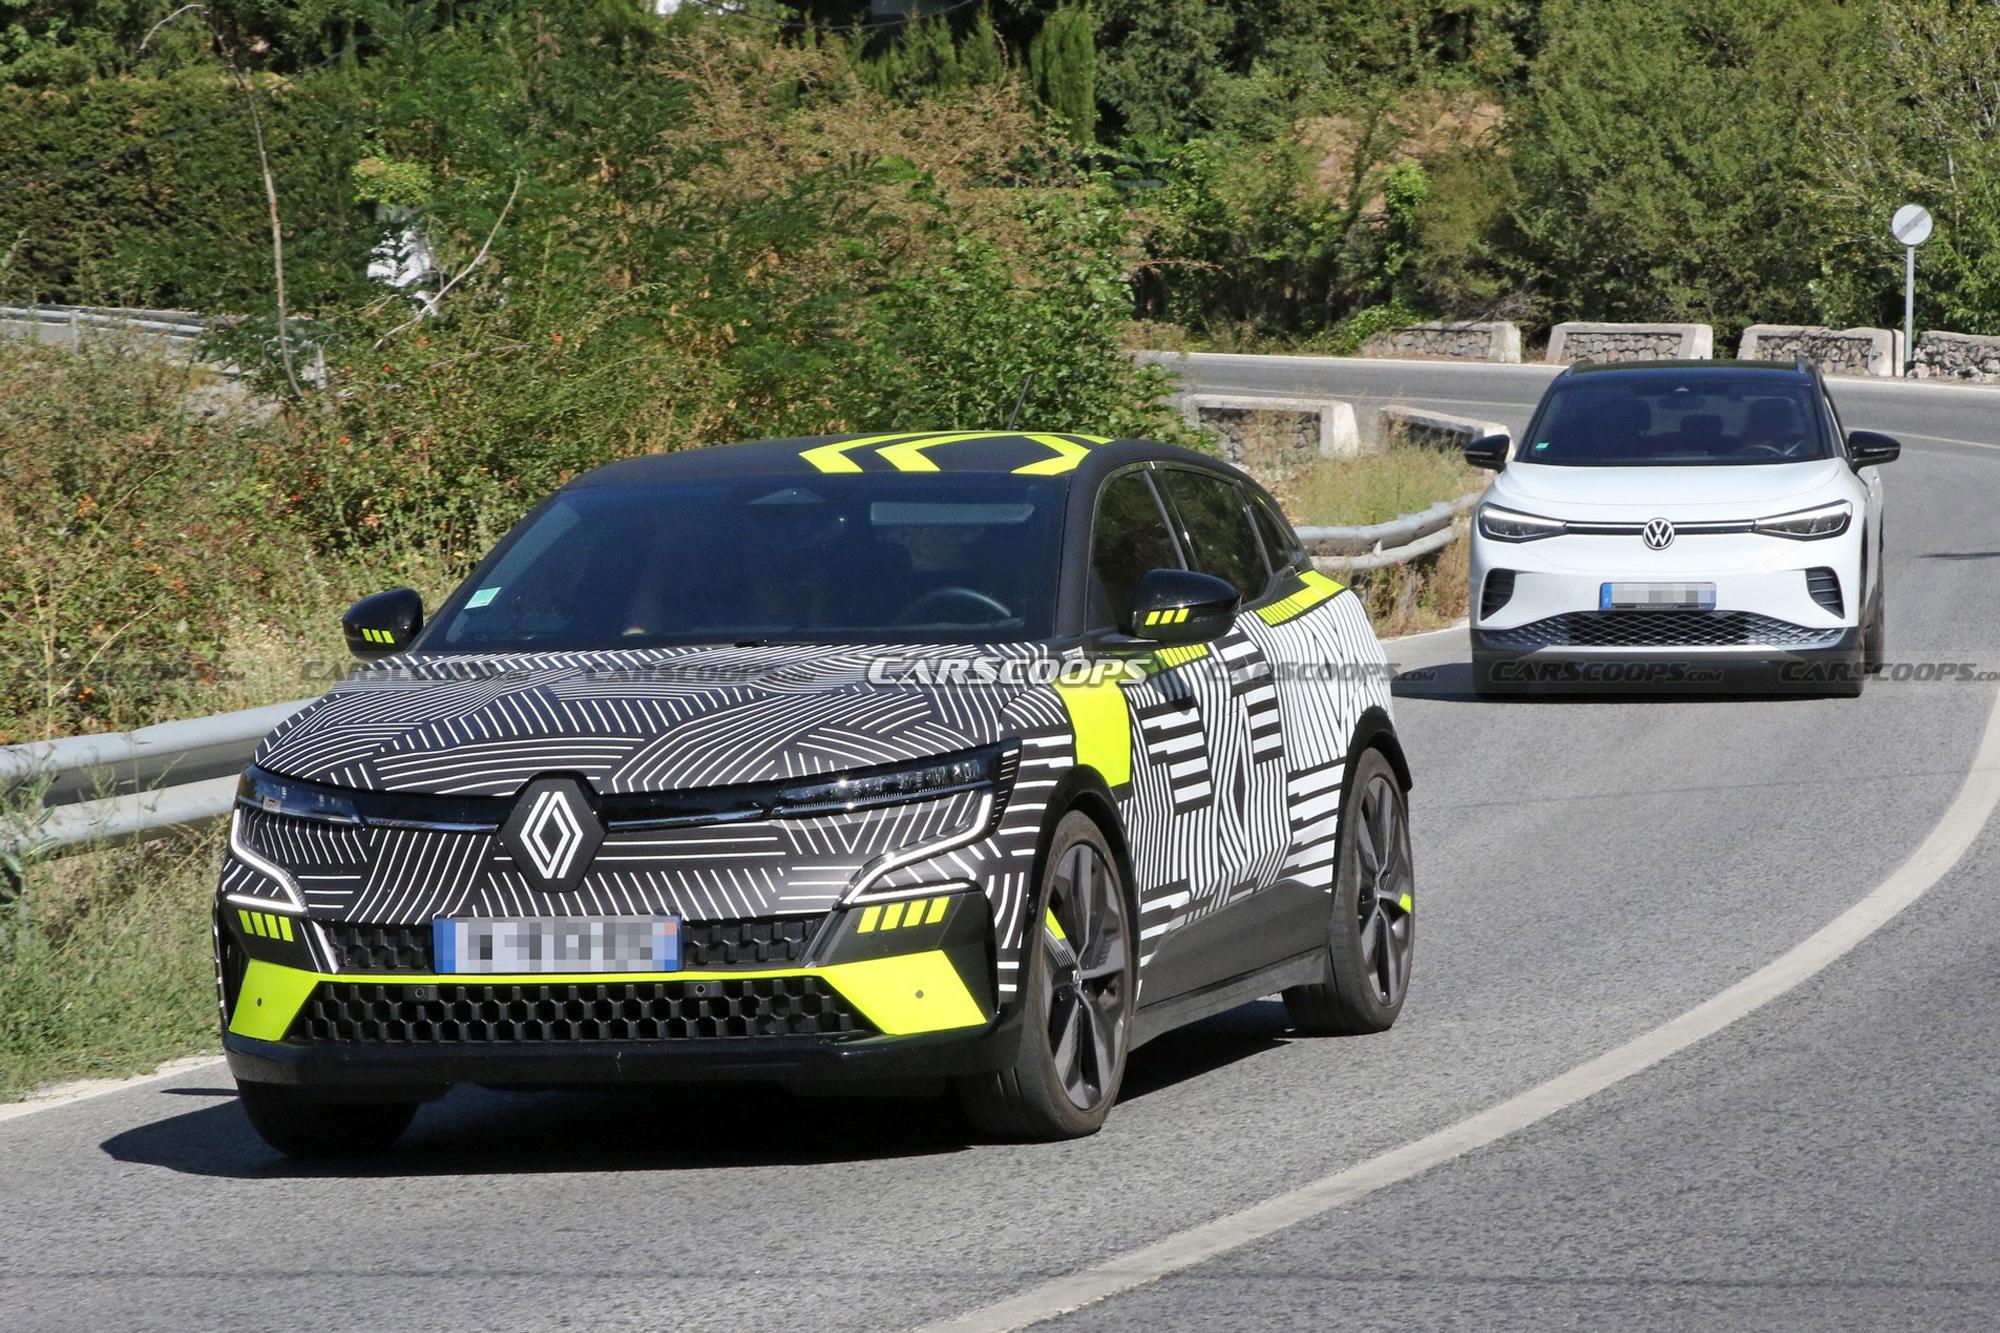 Spy-shots: Renault Megane E-Tech Electric